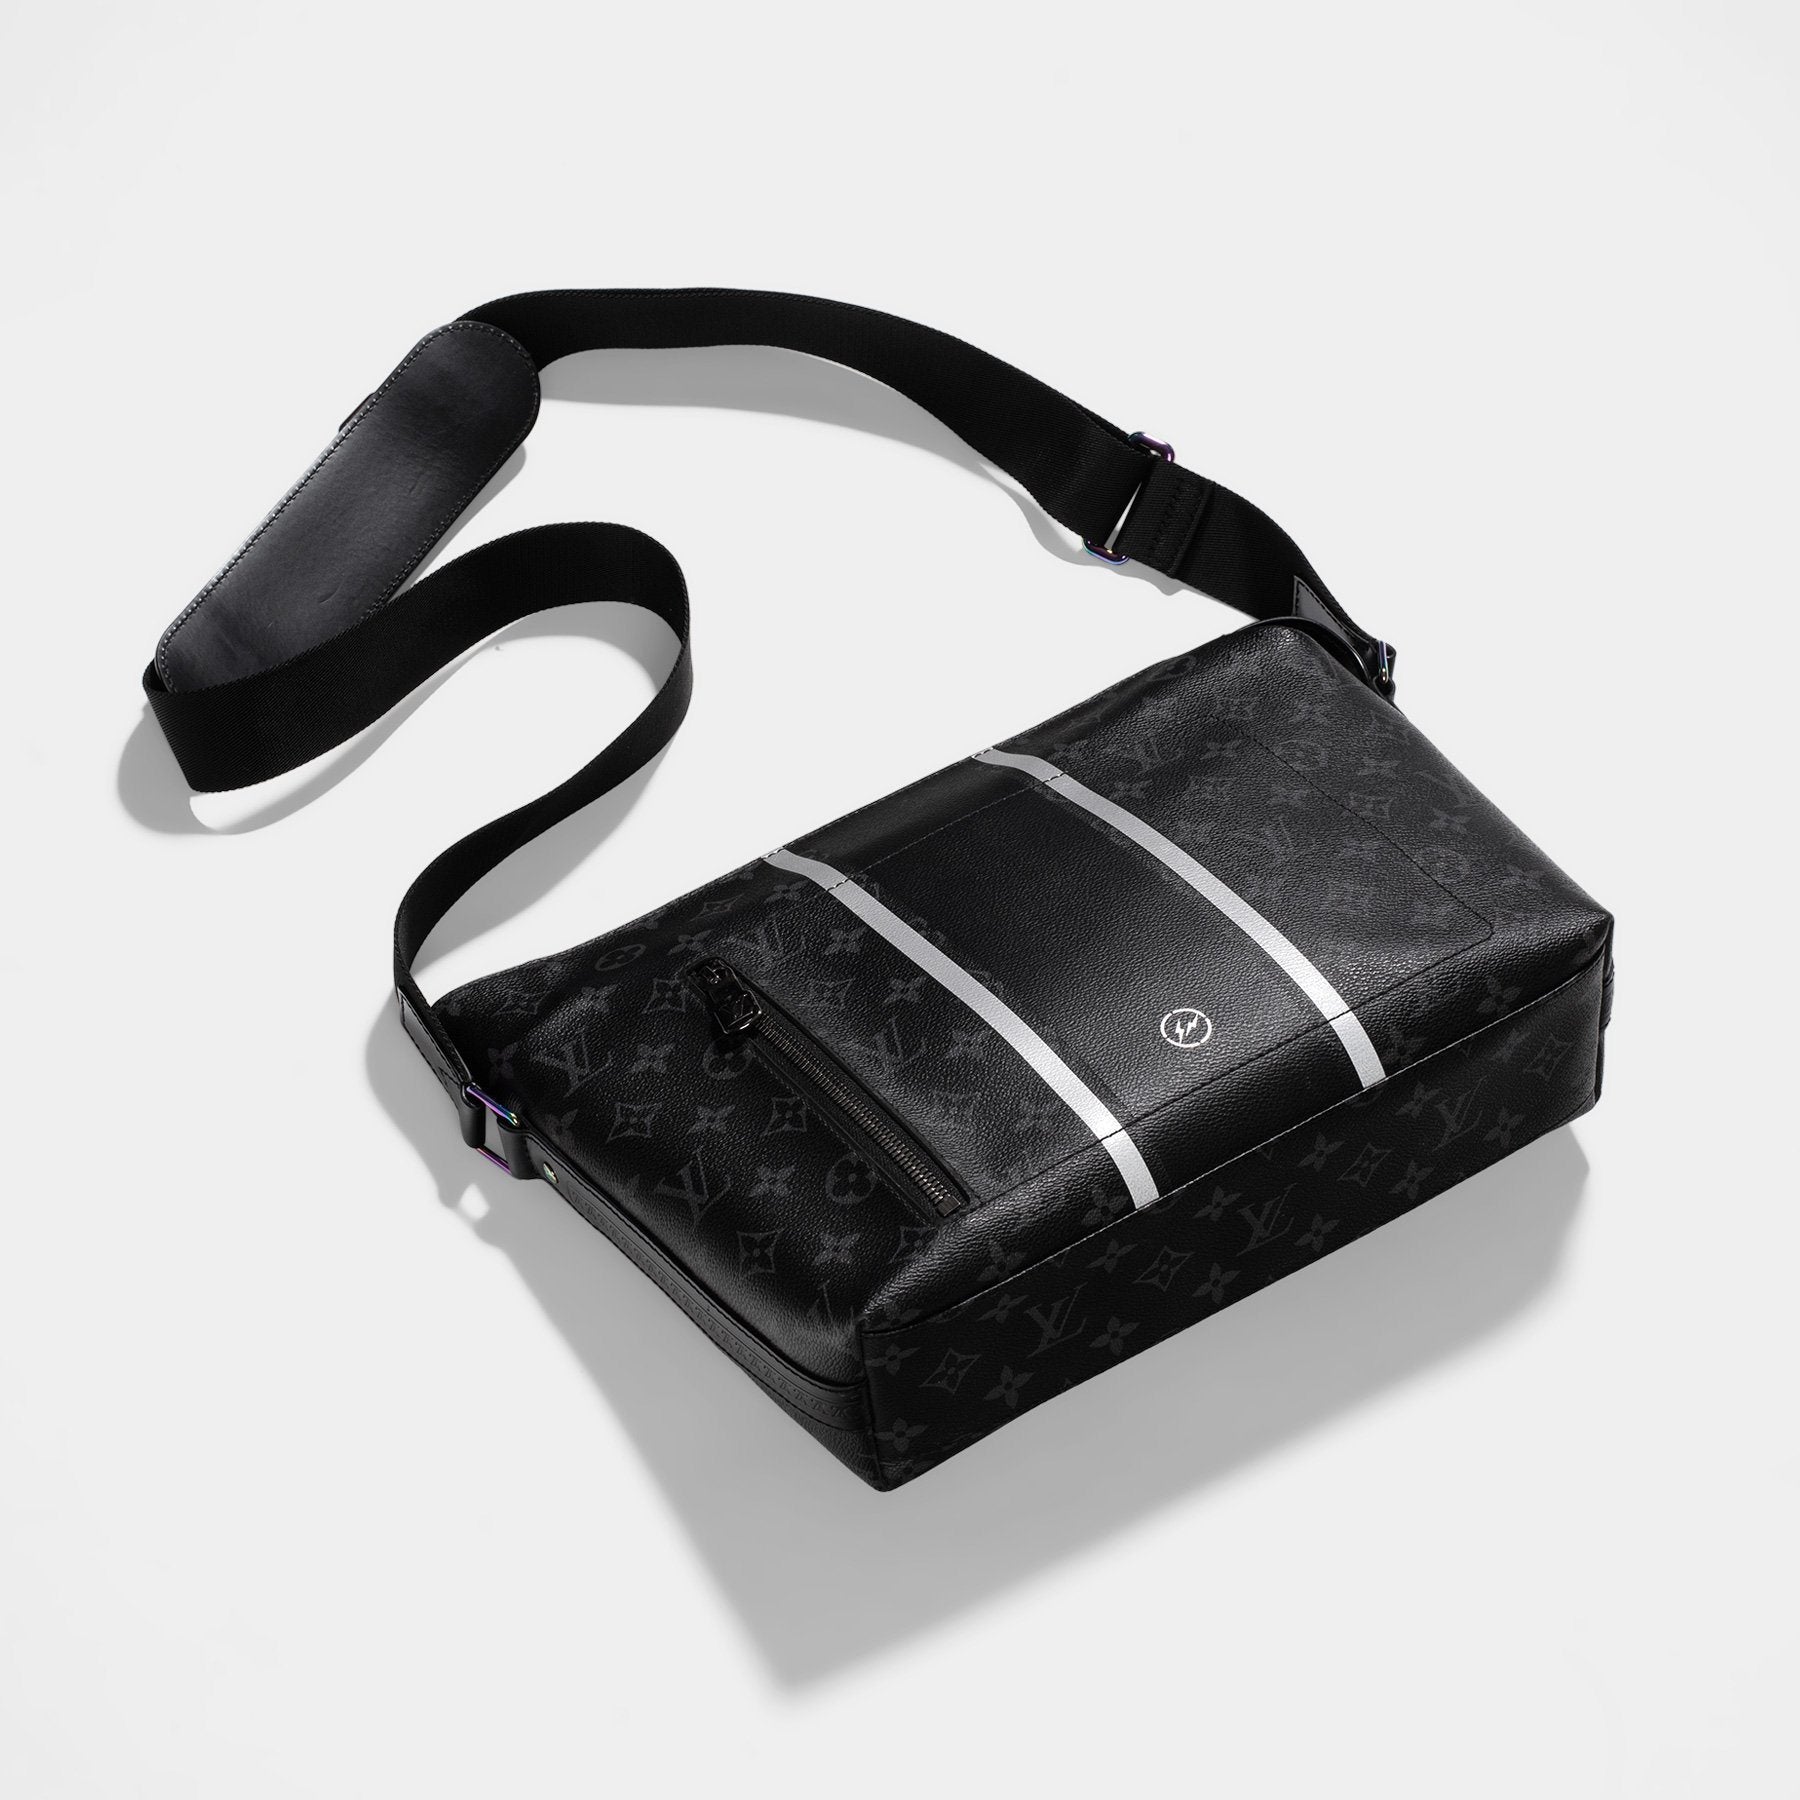 Louis Vuitton x fragment Apollo Backpack Monogram Eclipse Black